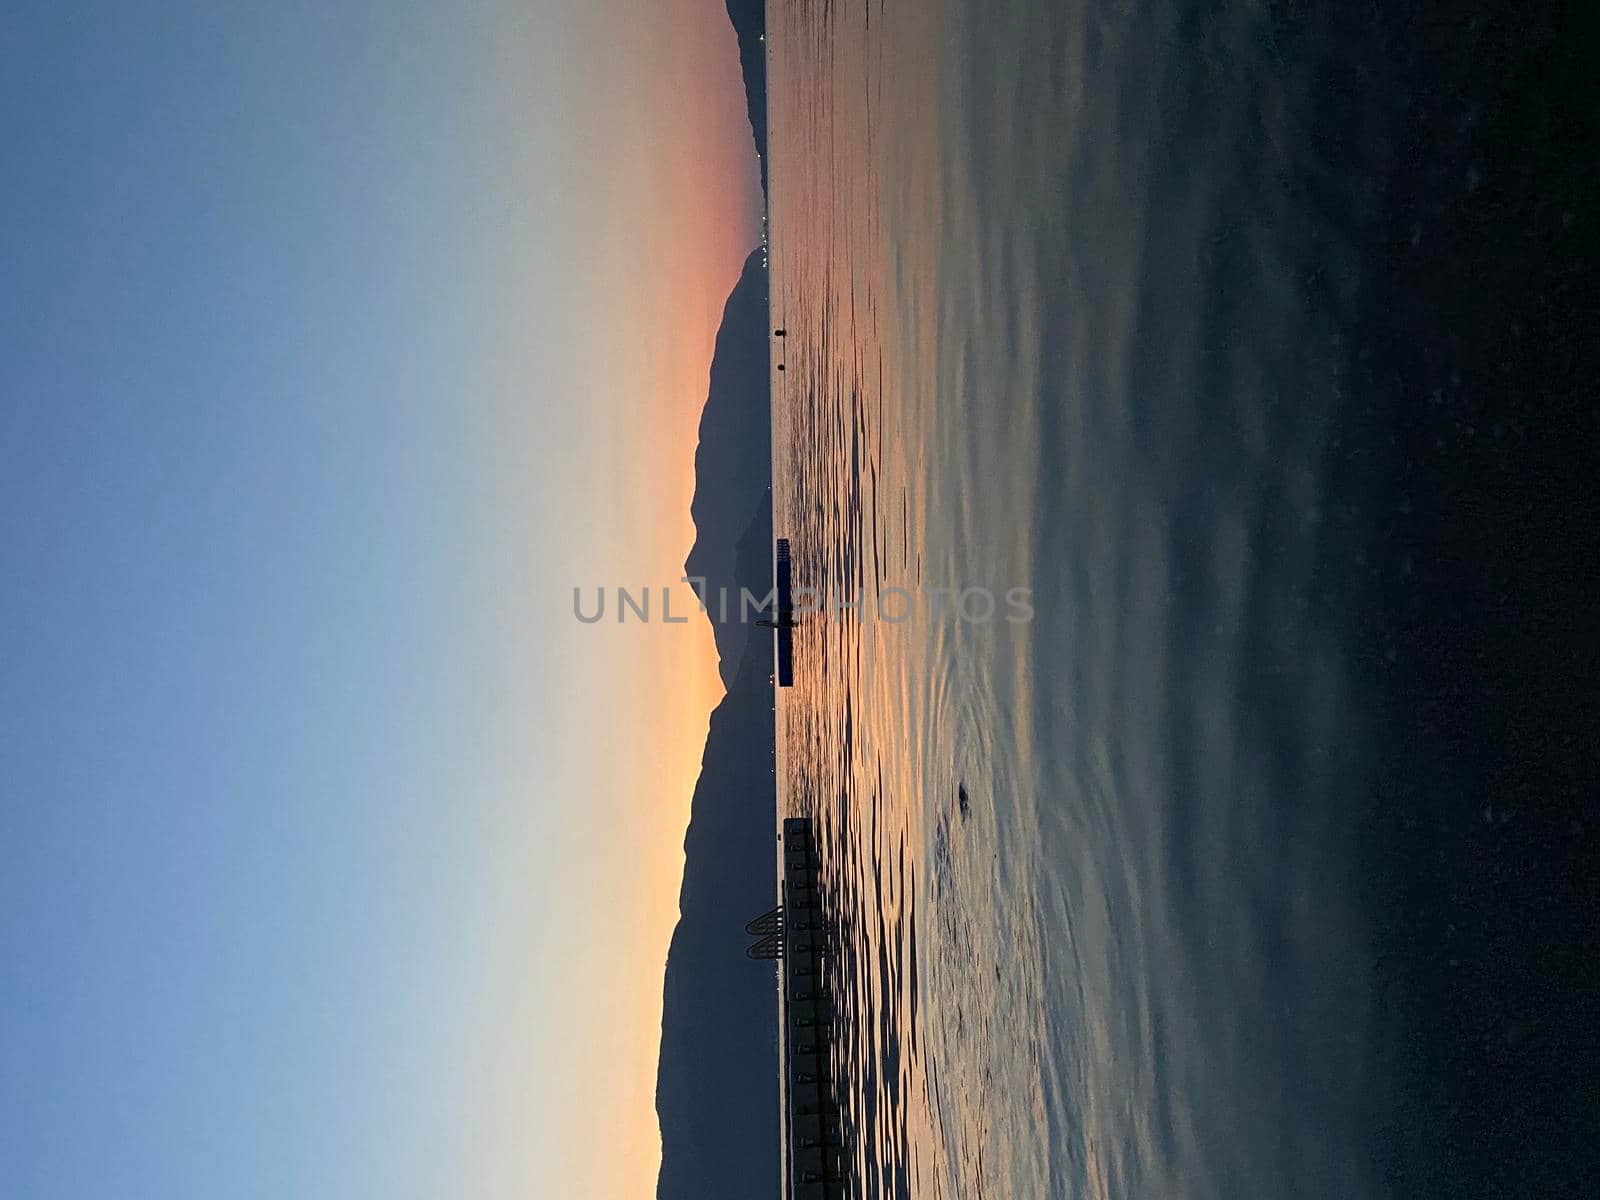 Tourist admiring the sunrise on tropical island - stock photo. High quality photo